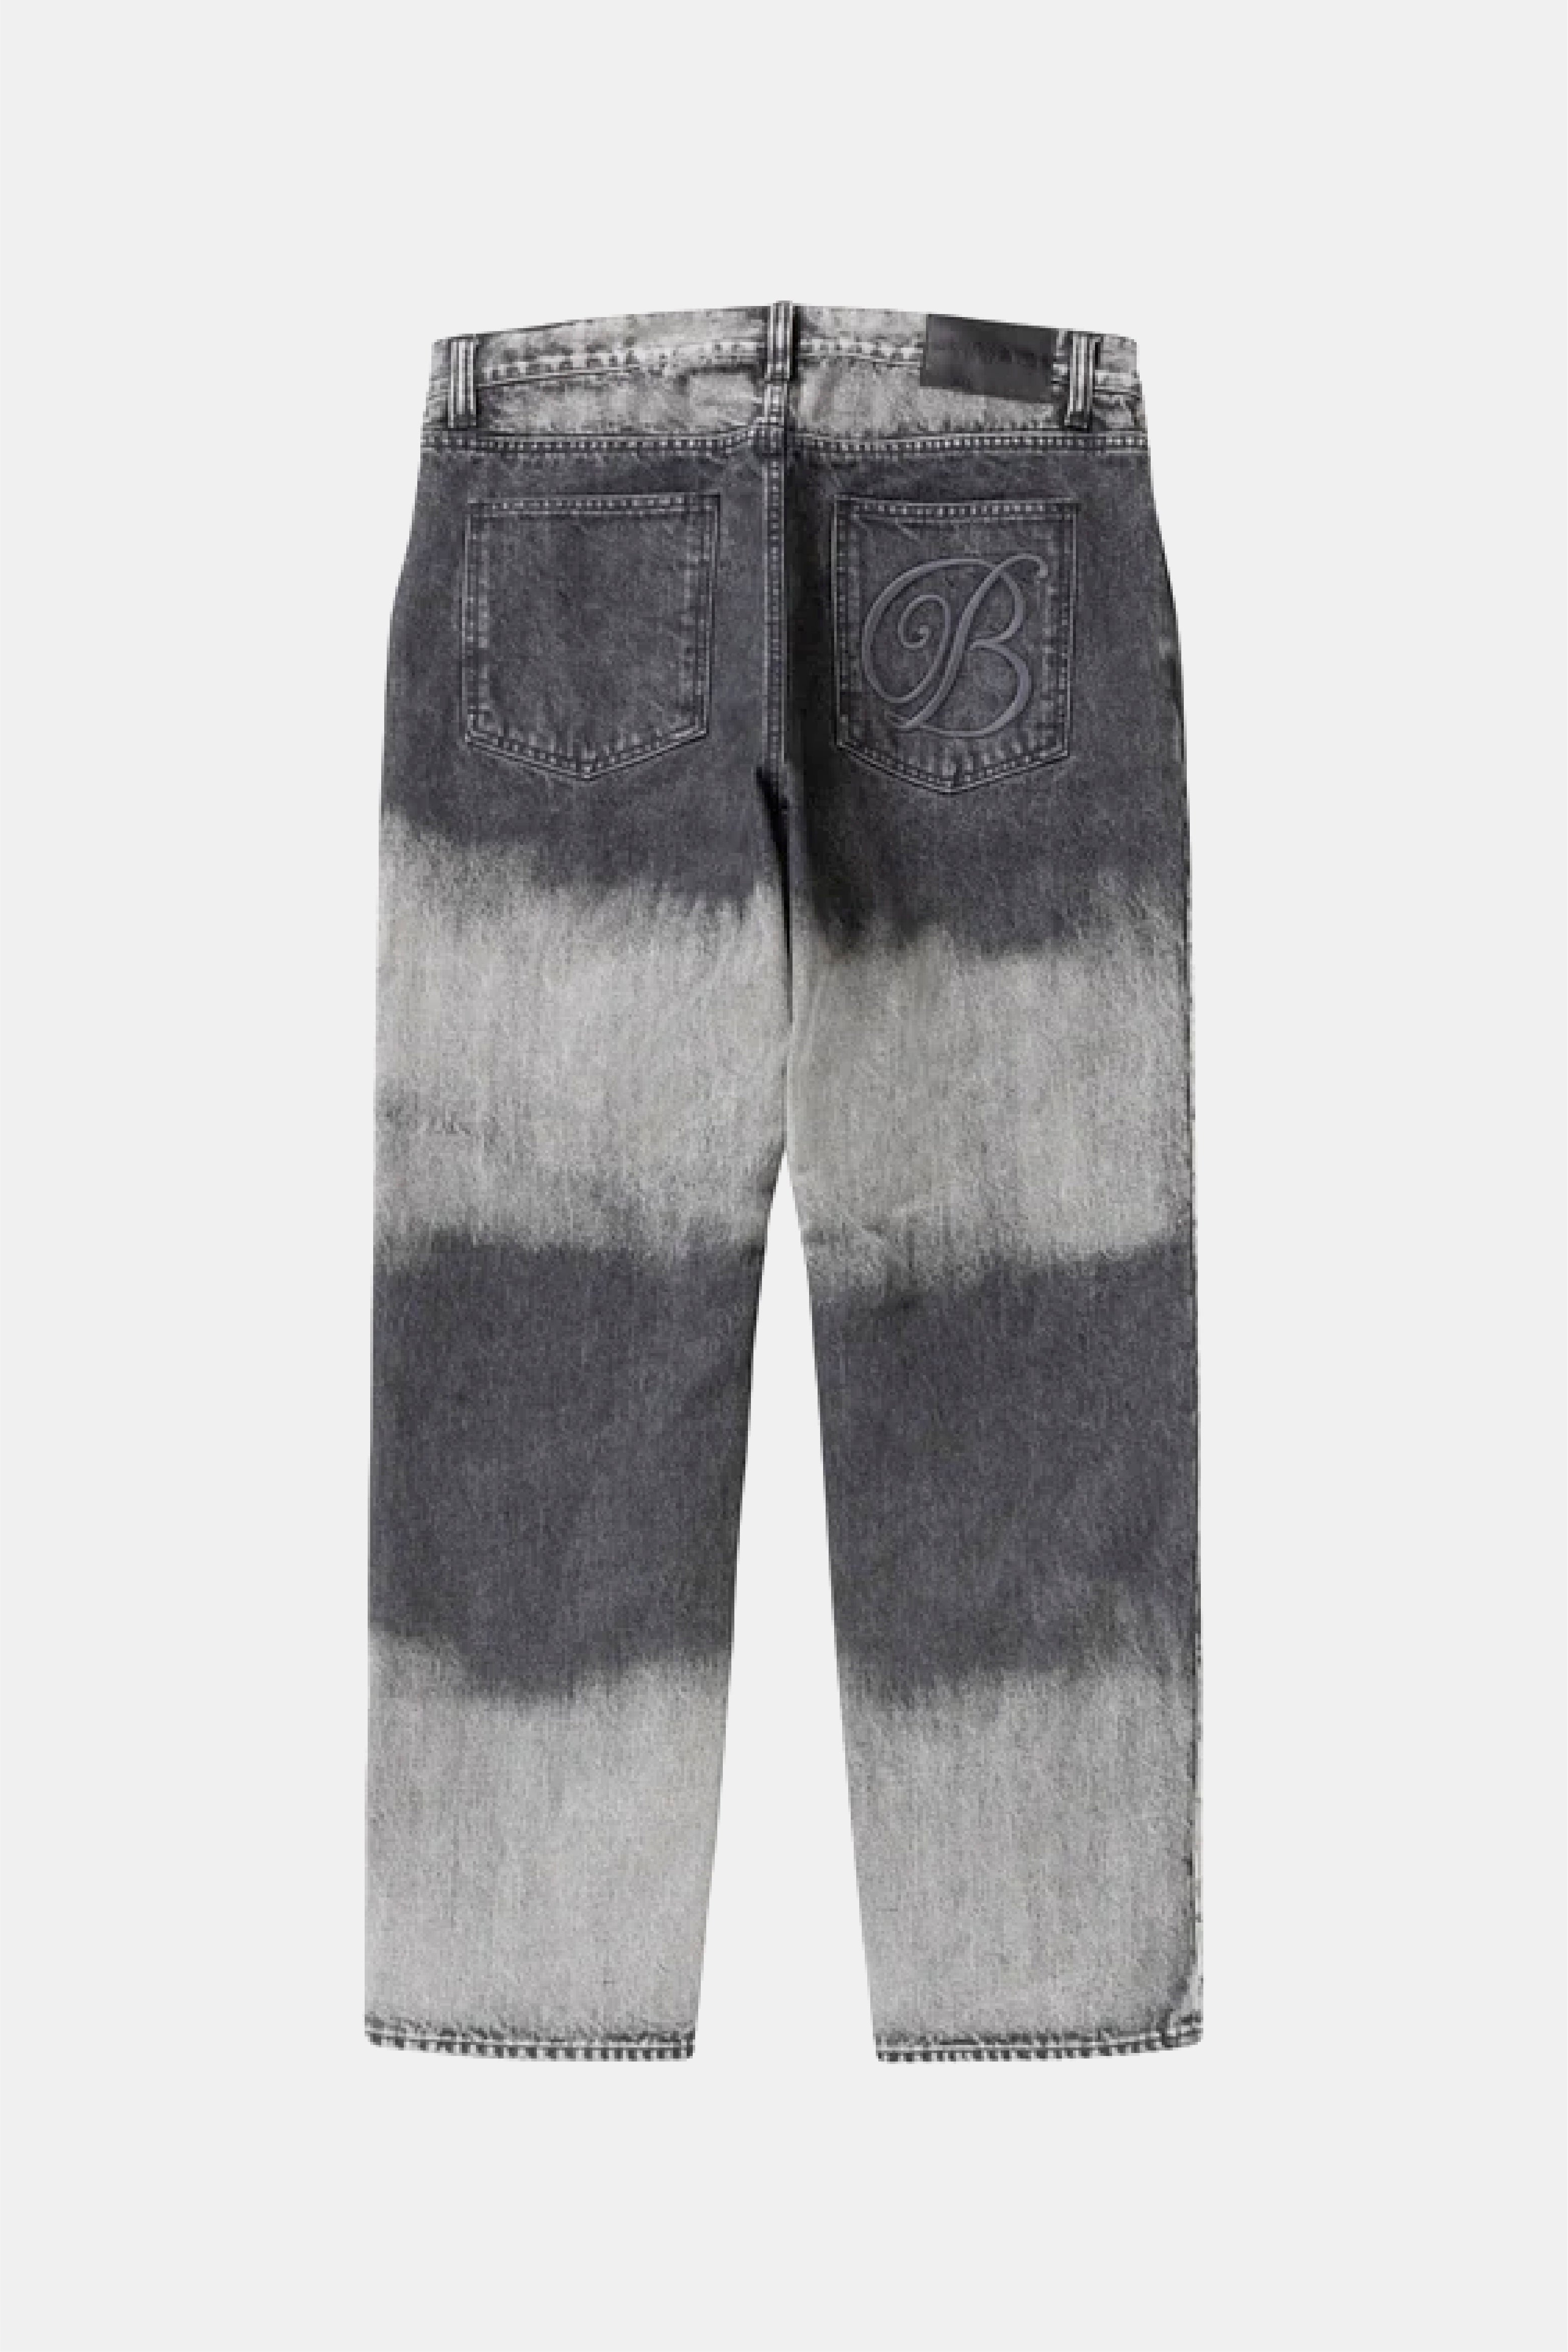 Selectshop FRAME - BLACKEYEPATCH Border-Bleached Emblem Baggy Jeans Bottoms Dubai